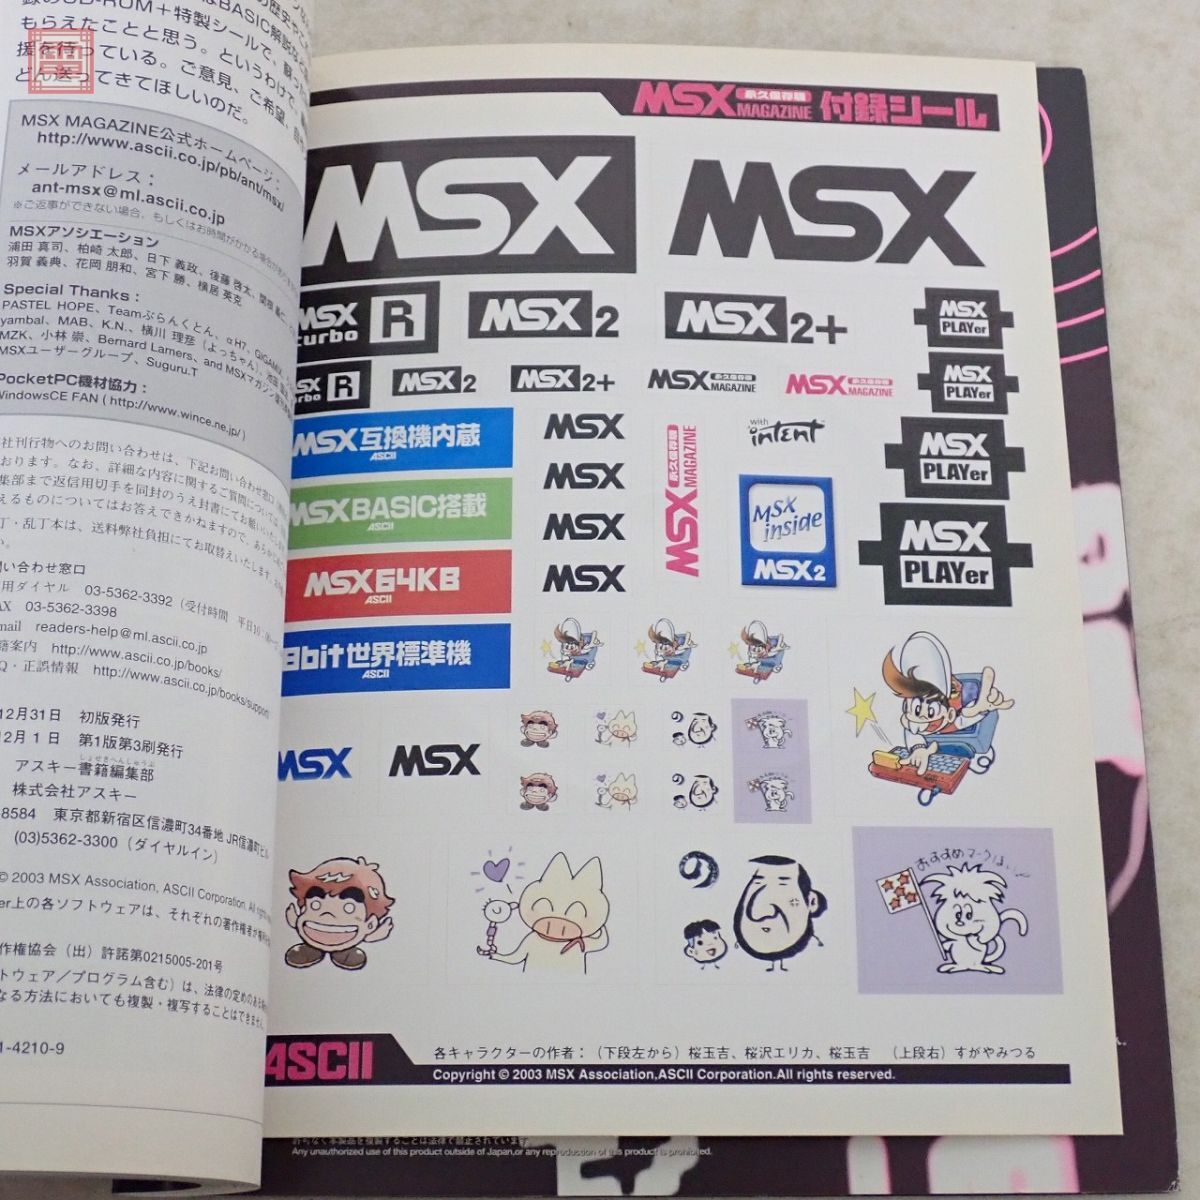 CD-ROM unopened publication MSX magazine permanent preservation version Special made seal attaching ASCII ASCII MSX MAGAZINE[20